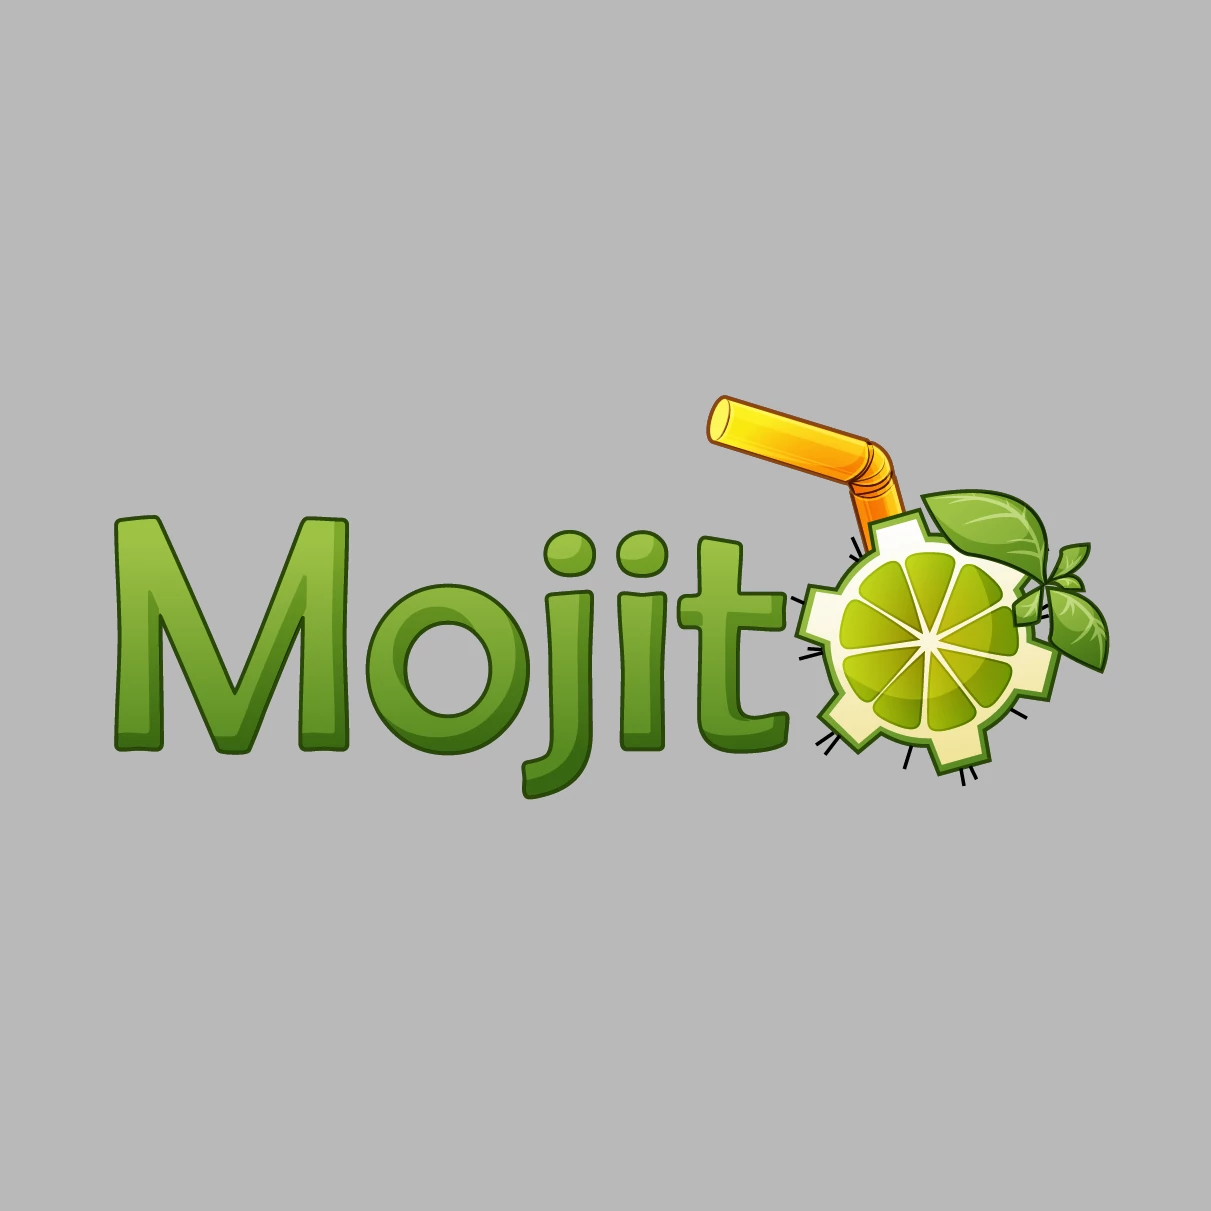 Mojito game engine